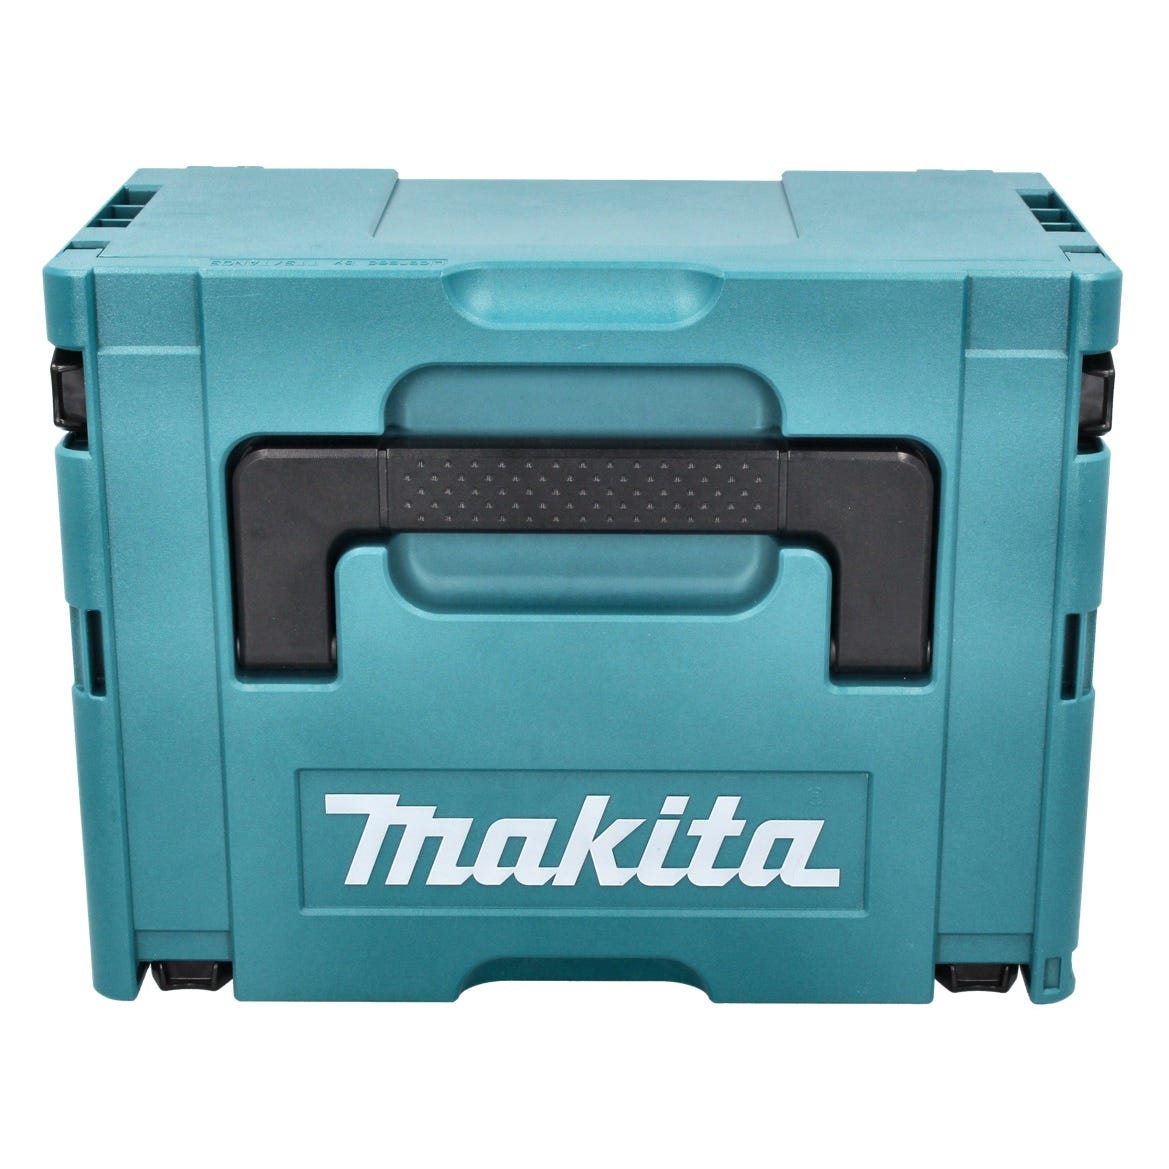 Makita DSS 610 RF1J Scie circulaire à main sans fil 18 V 165 mm + 1x Batterie BL 1830 B + Chargeur DC18RC + MAKPAC 2